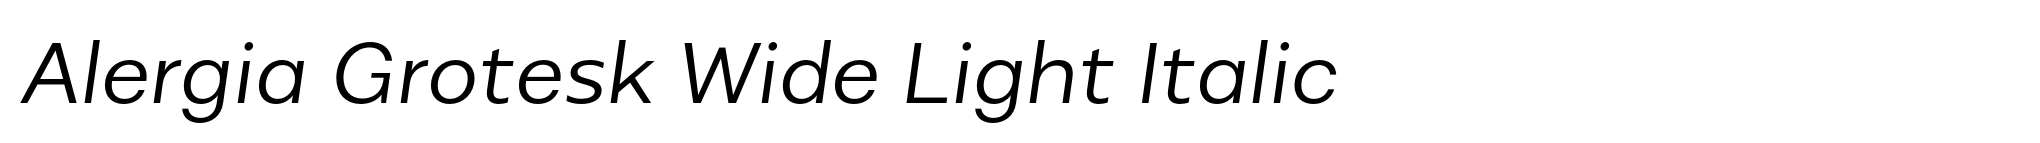 Alergia Grotesk Wide Light Italic image